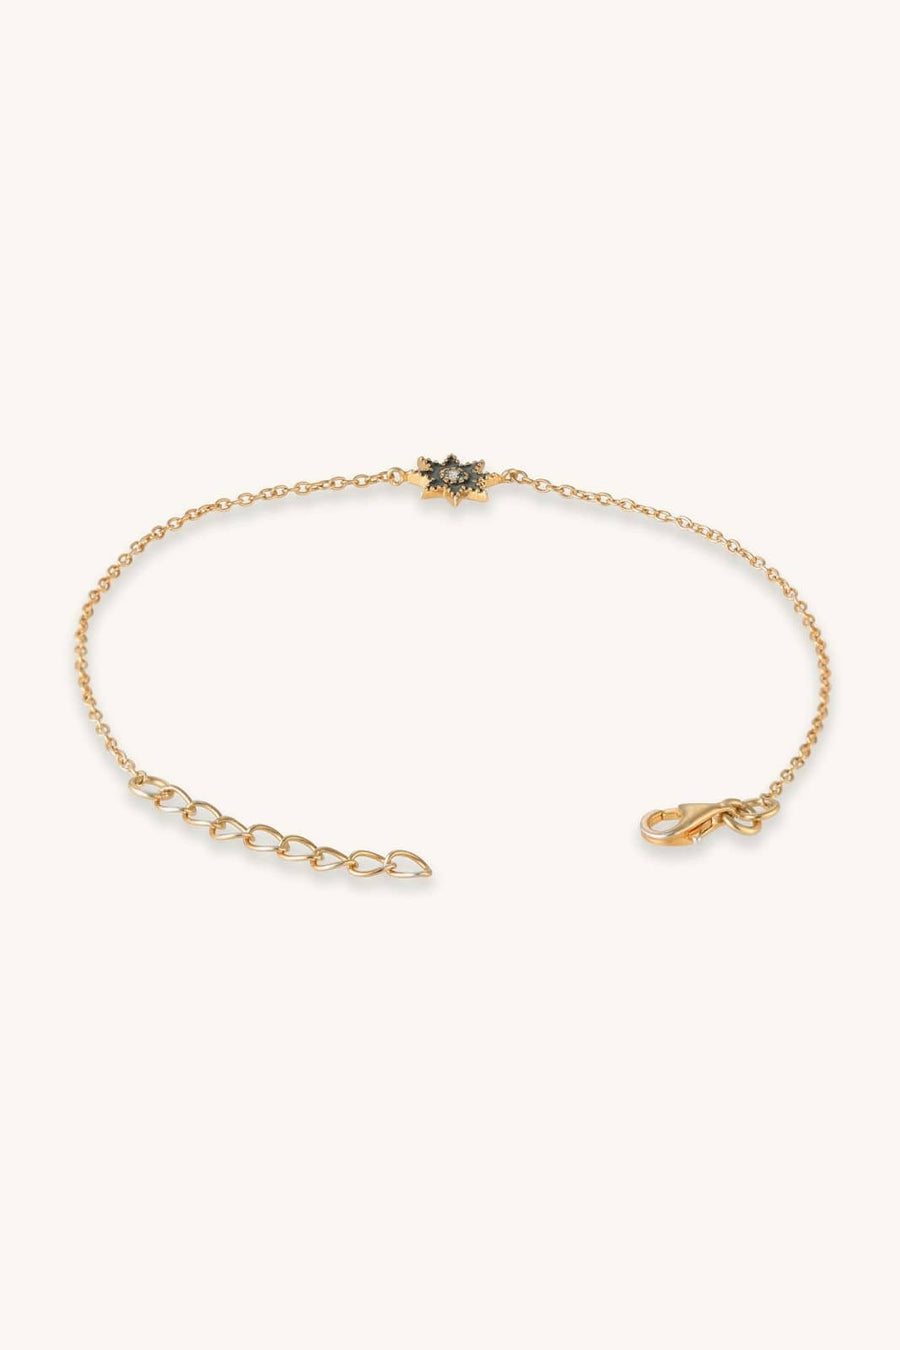 Star Shadow, Minimal Bracelet, Jewelry, Fashion, Accessories, Delicate, Elegant.